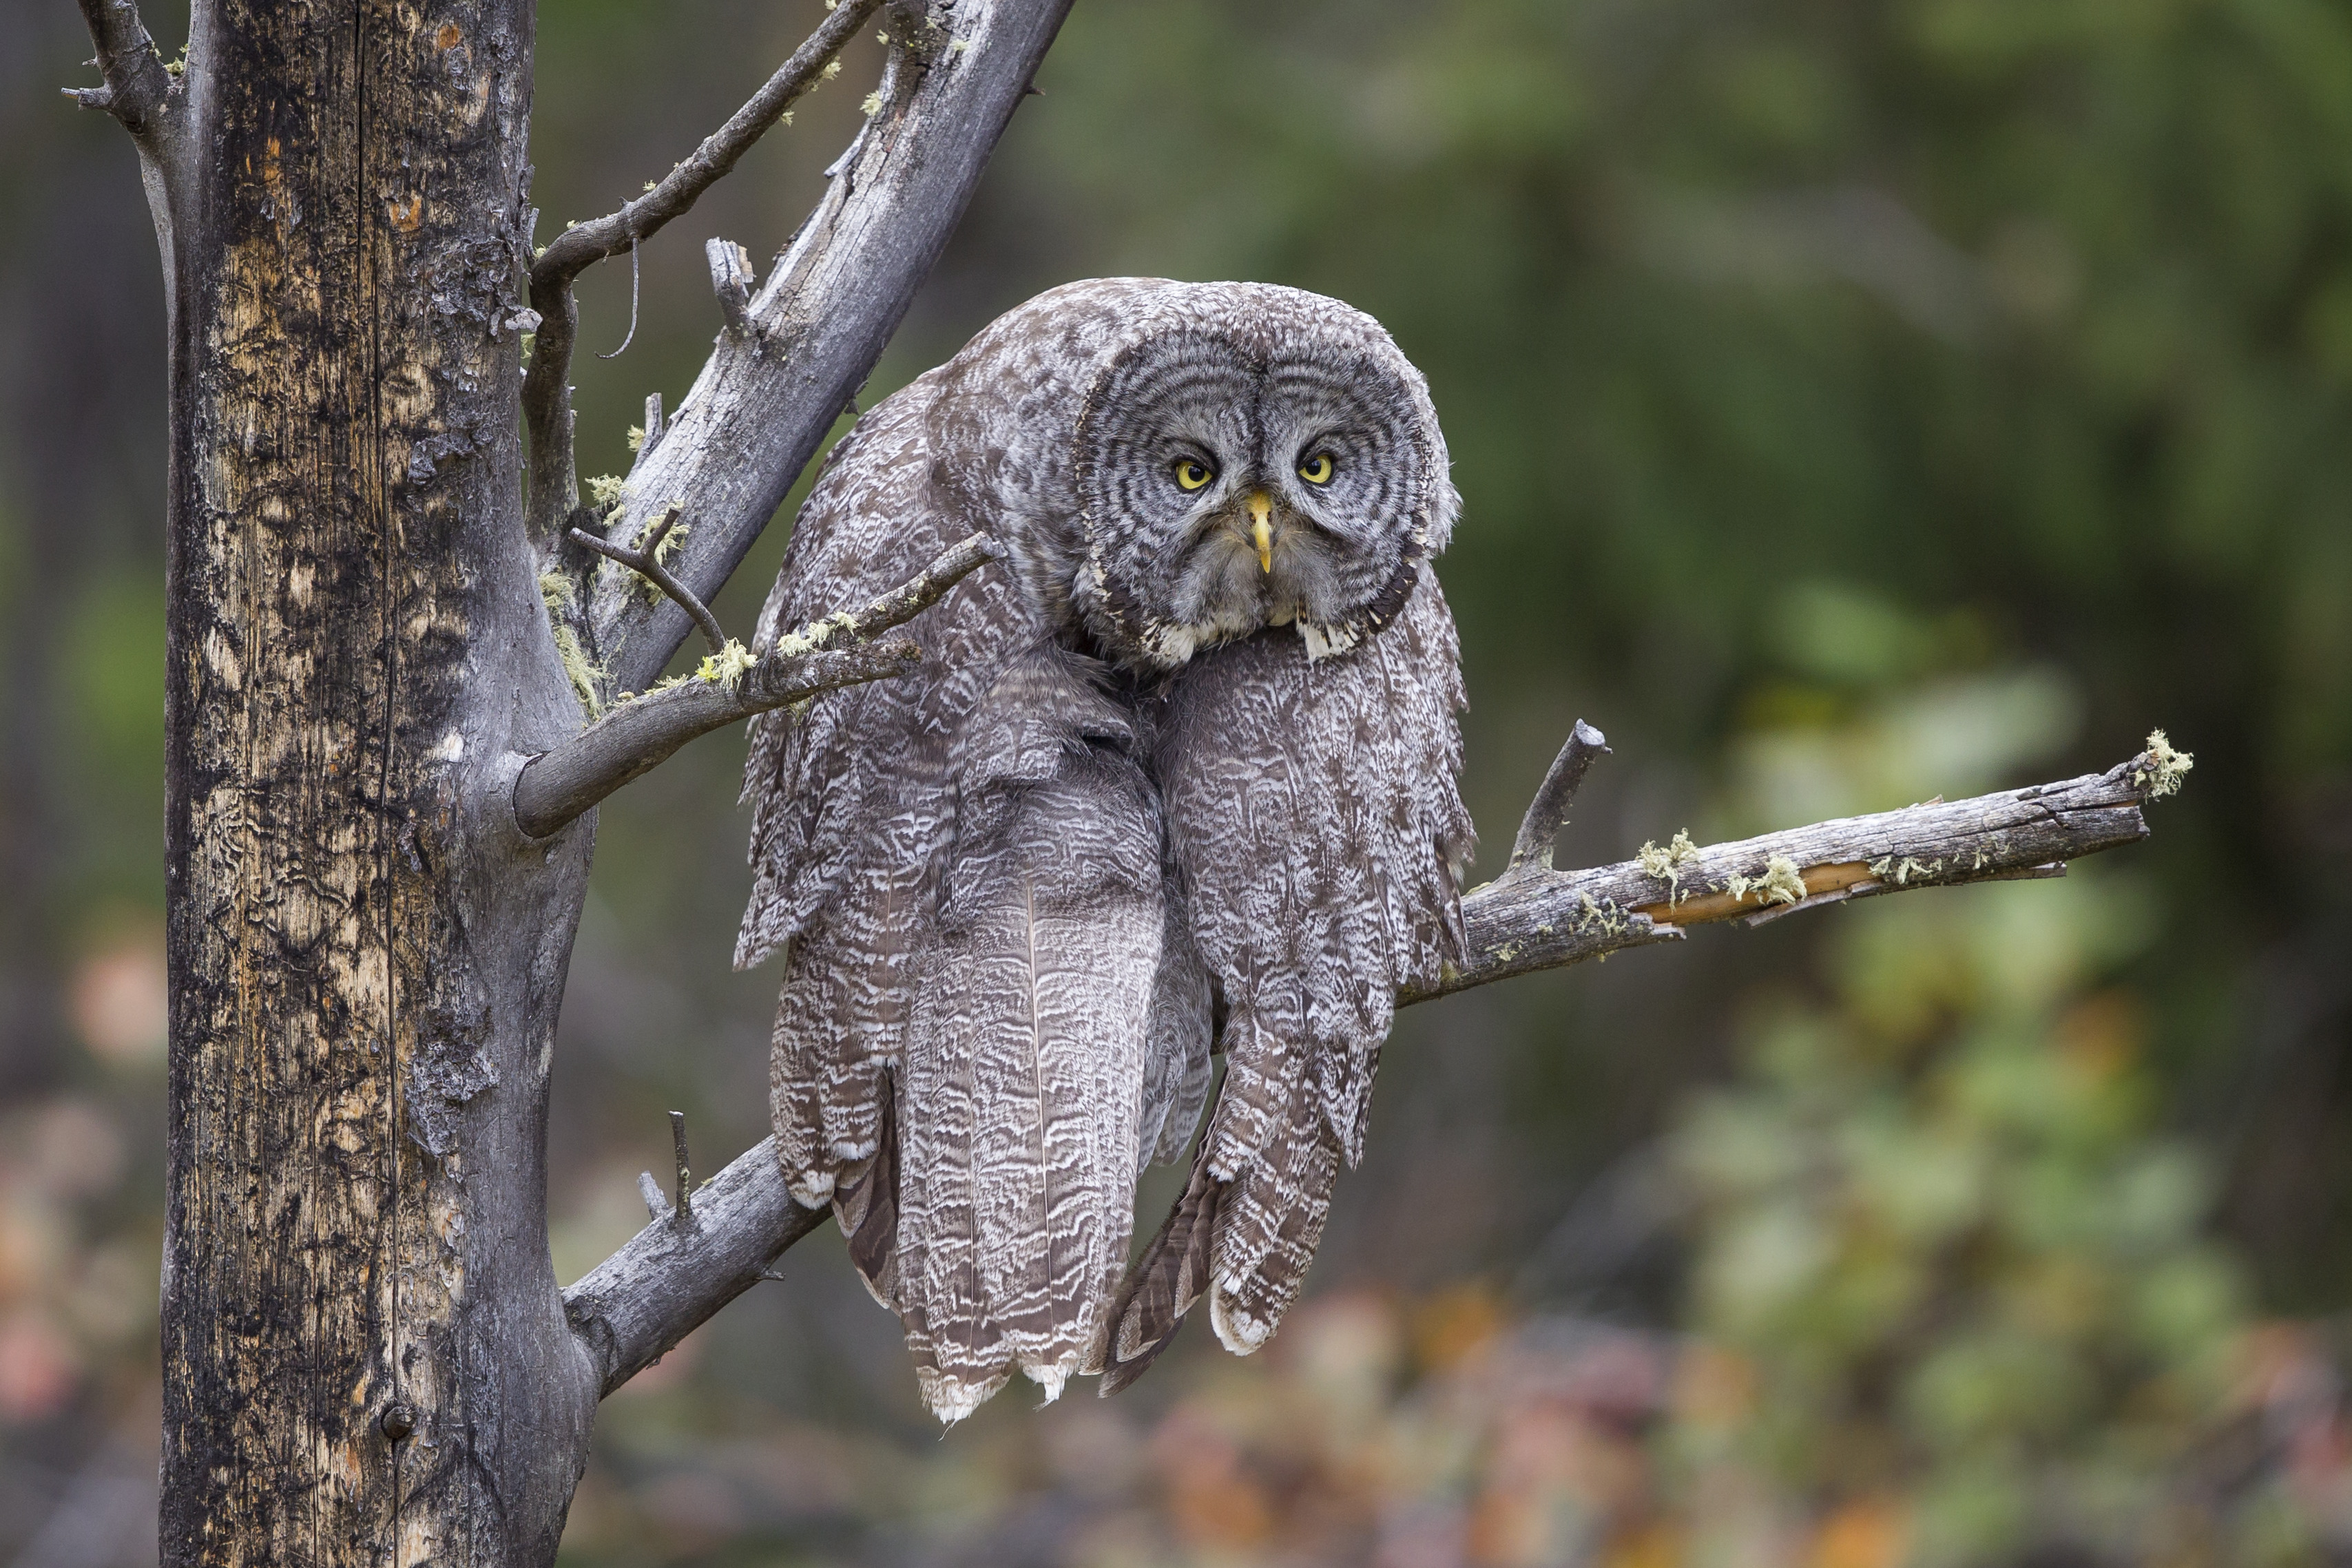 A grey owl slumped on a tree branch